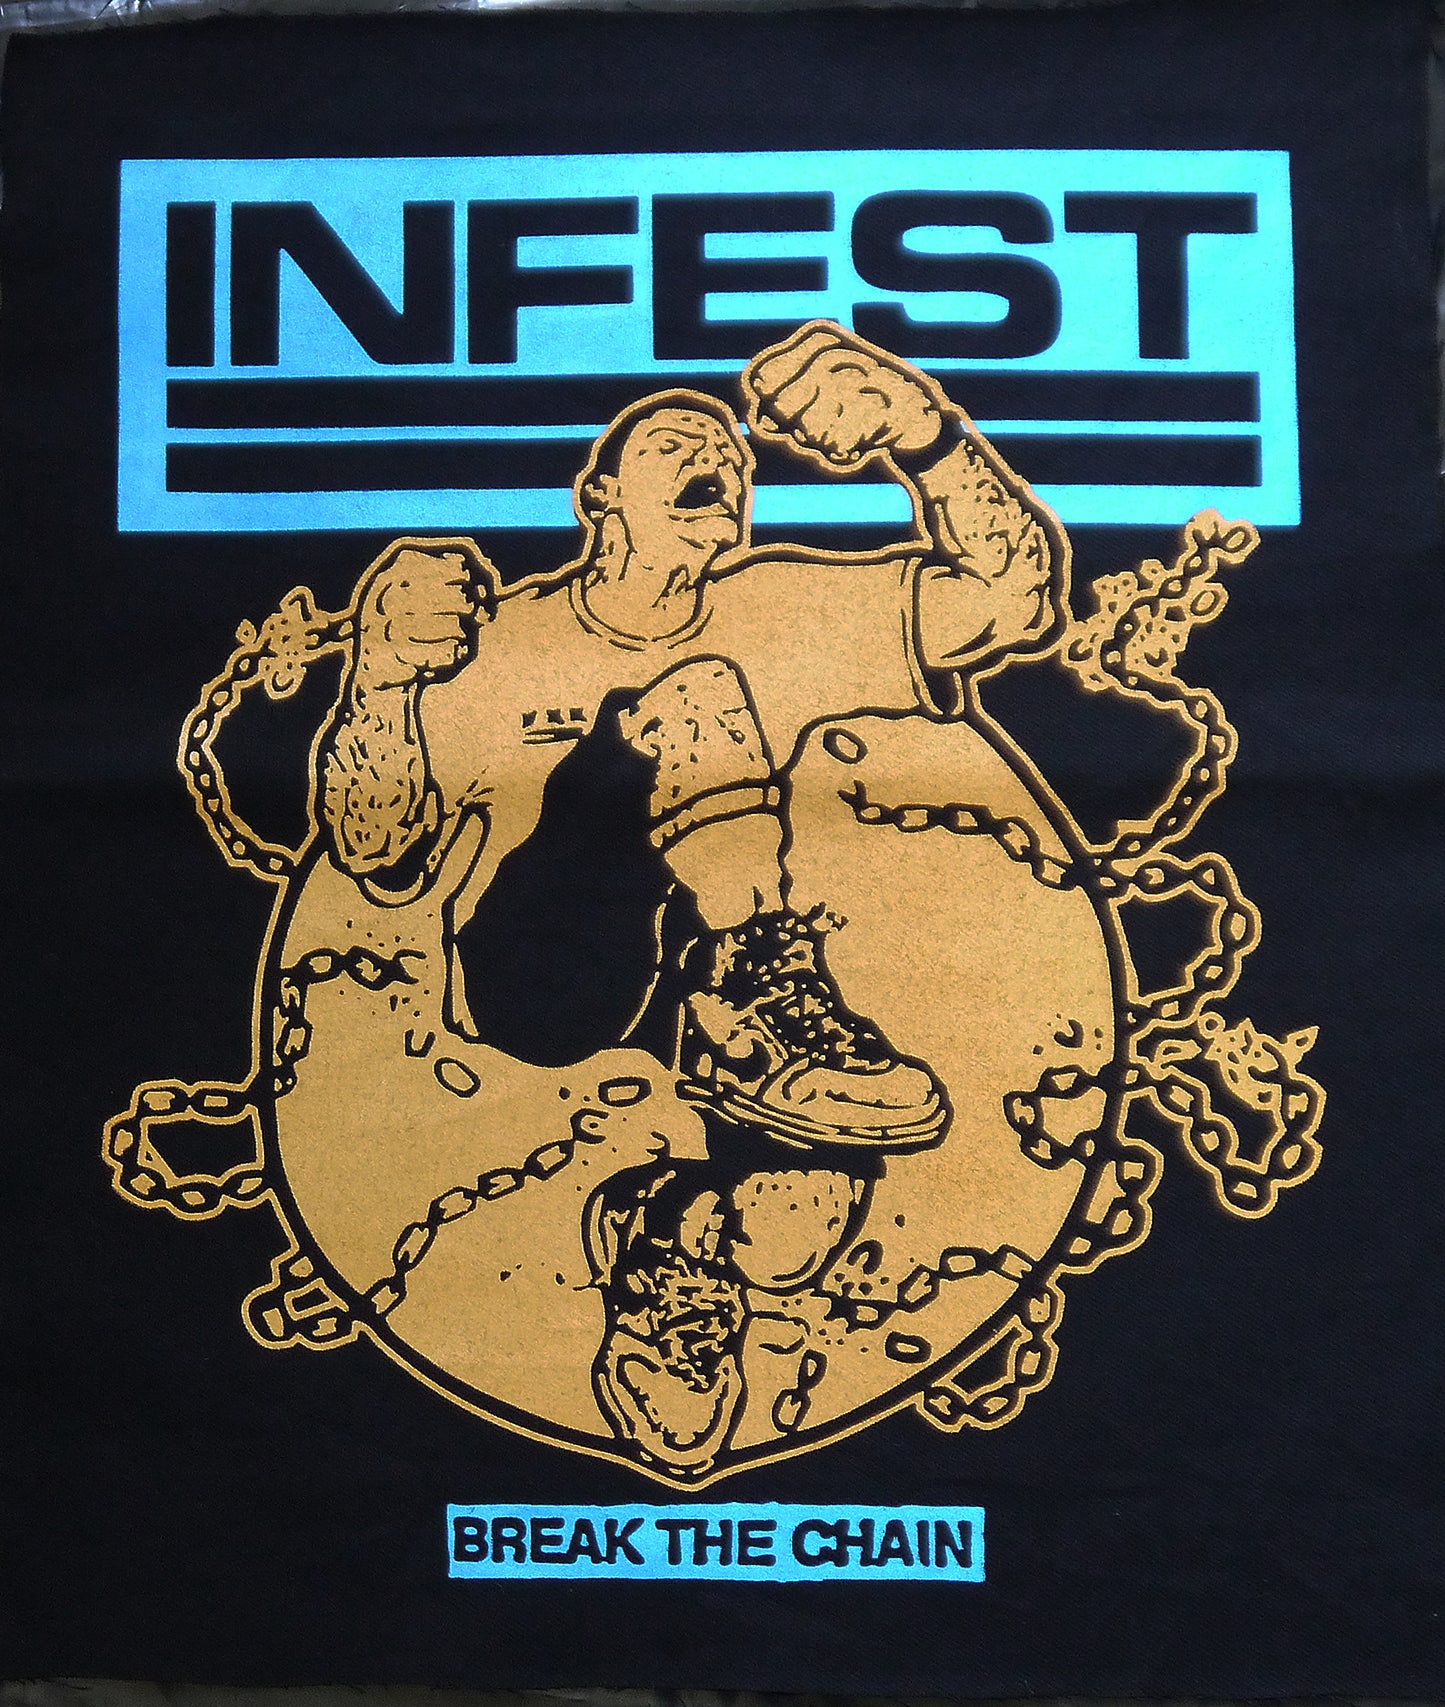 INFEST - Break The Chain T-shirt